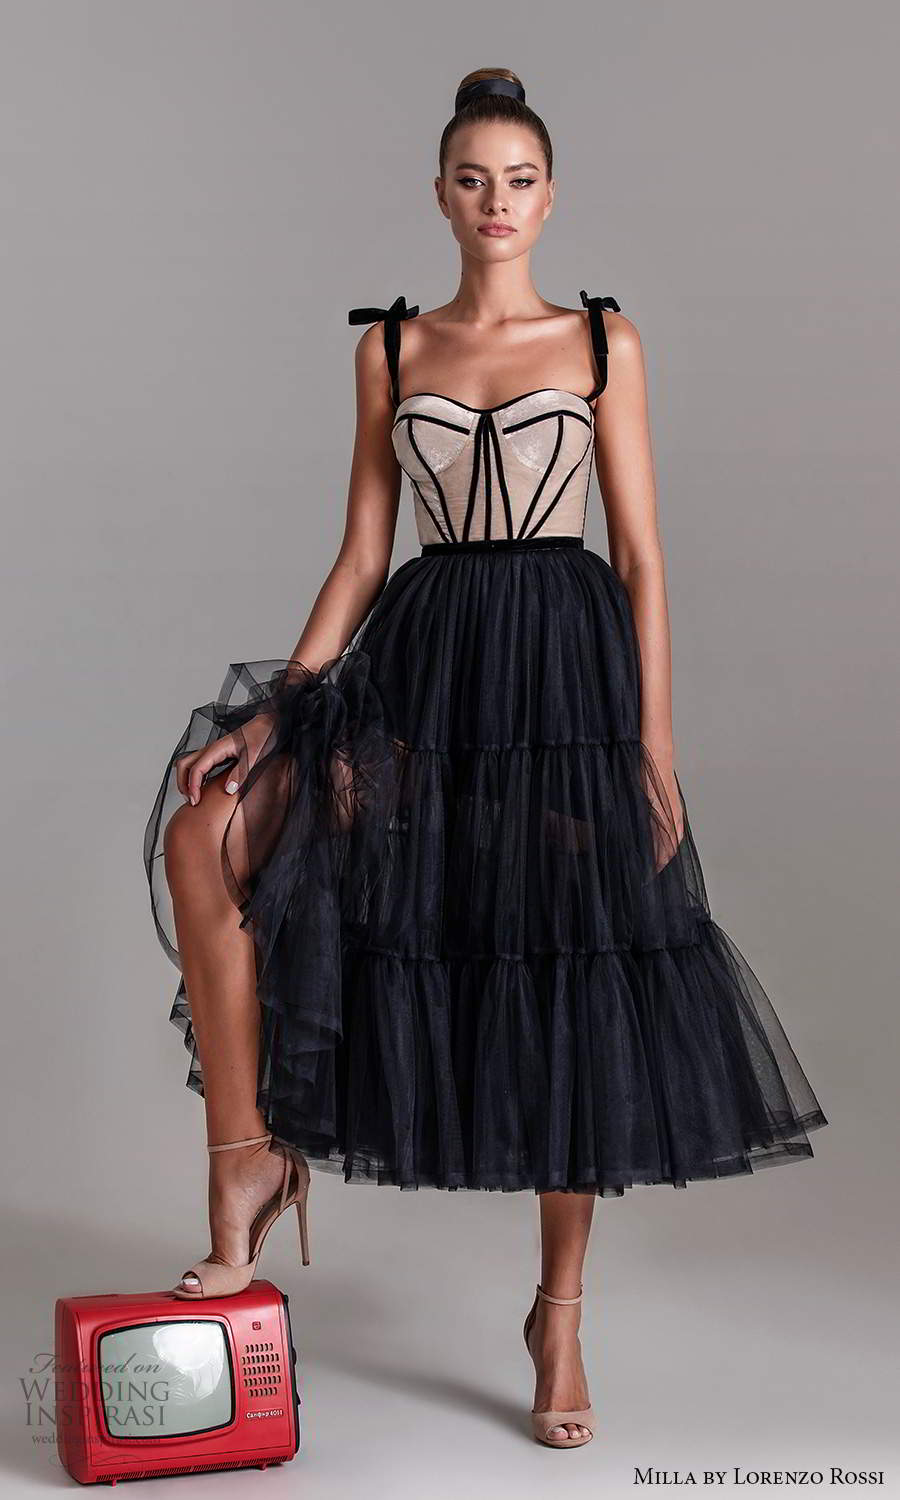 milla by lorenzo rossi 2020 rtw sleeveless straps semi sweetheart neckline corset bodice a line ball gown tea length wedding dress black skirt (3) mv